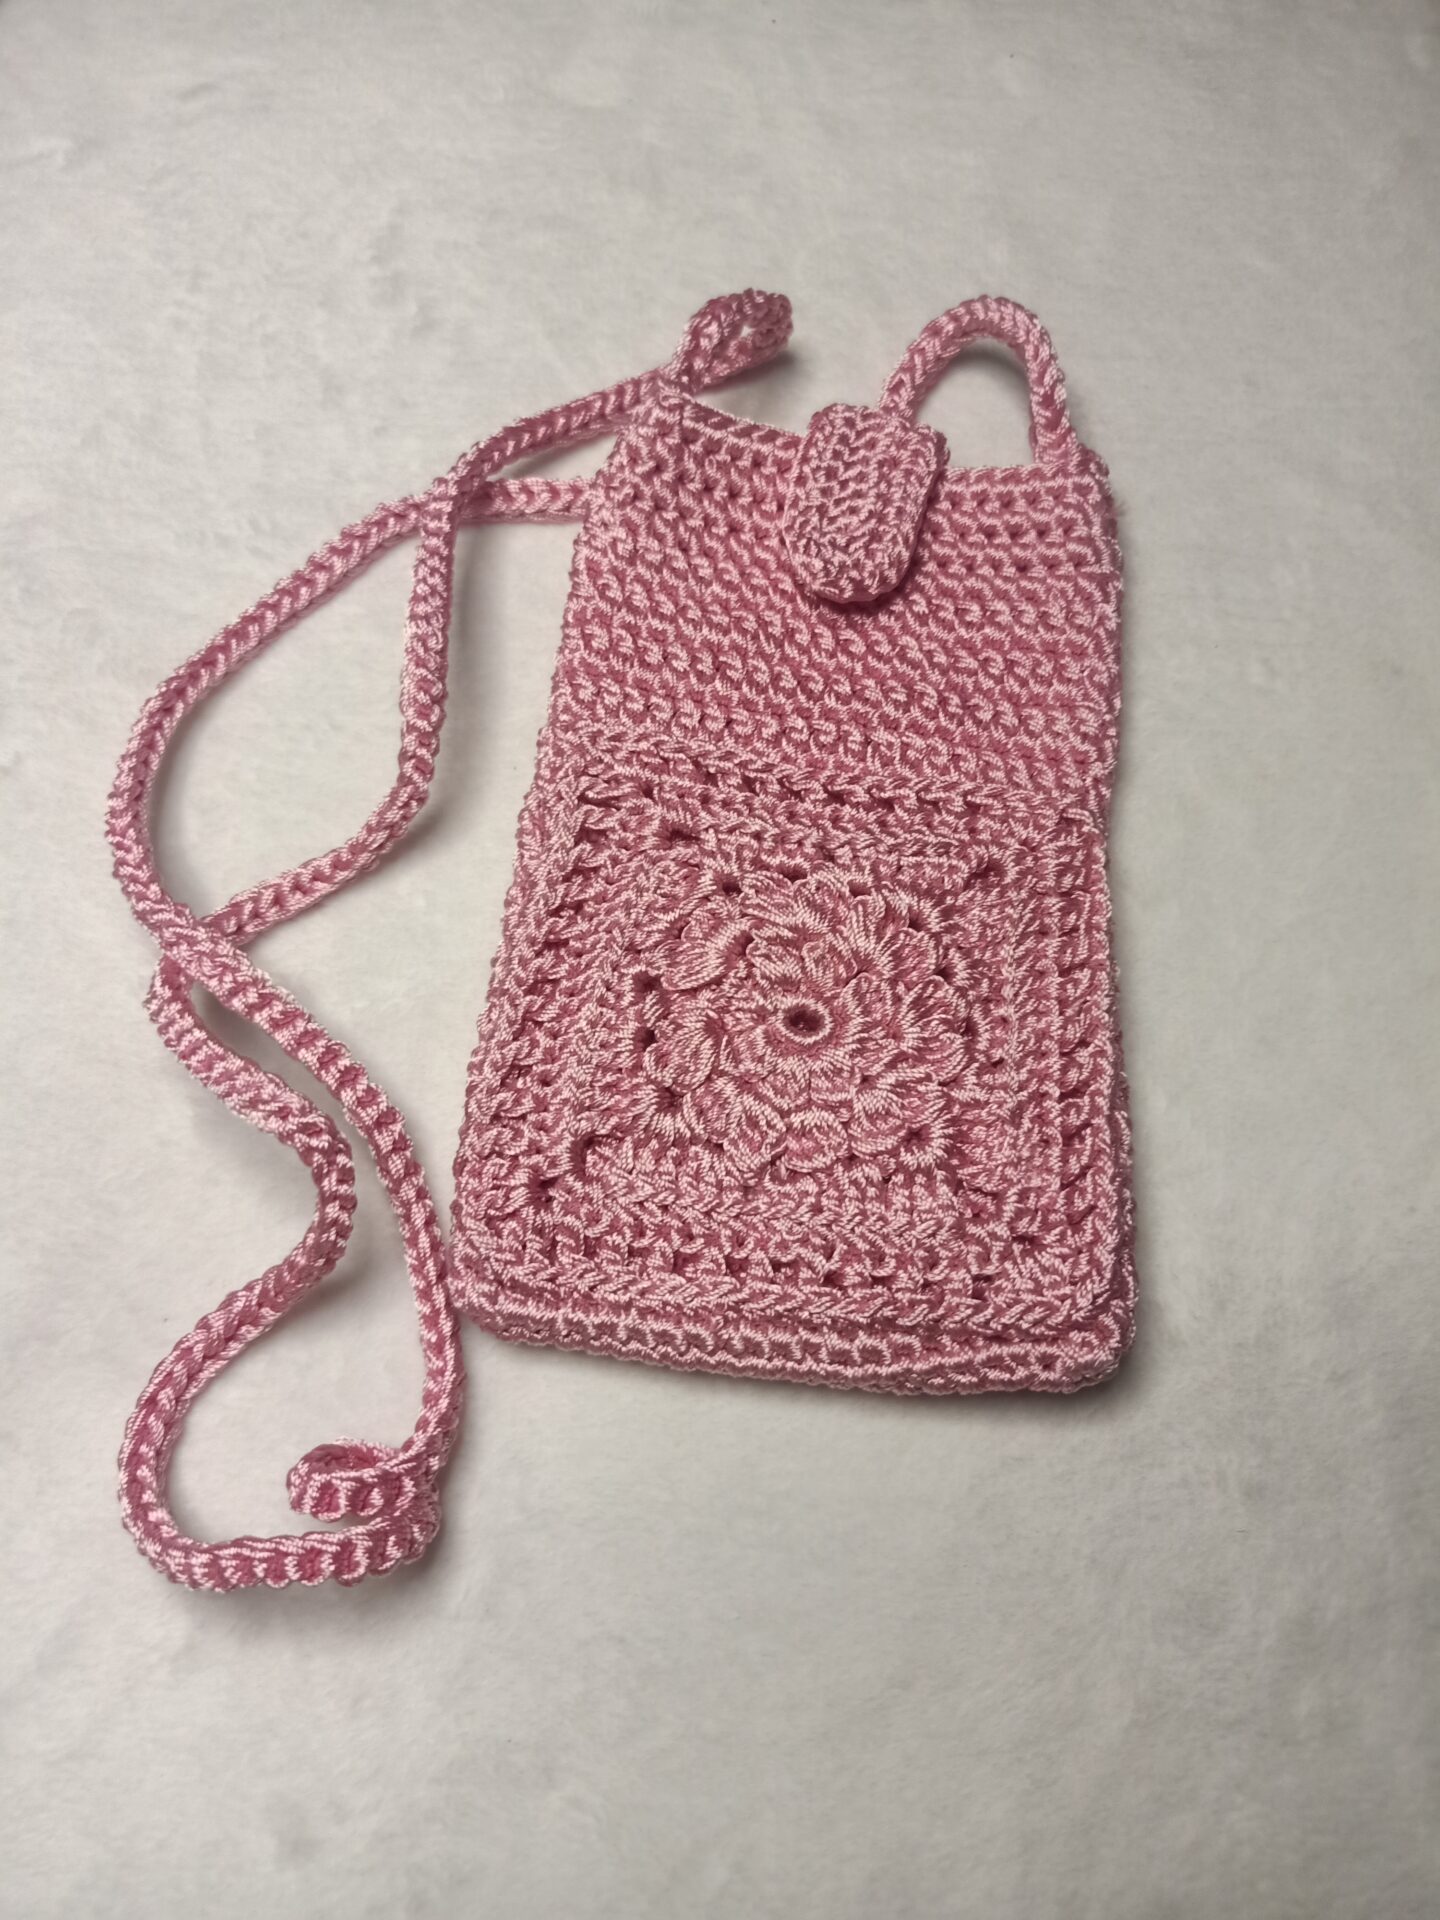 DIY Tutorial | How to crochet mobile phone bag | neck phone bag - YouTube